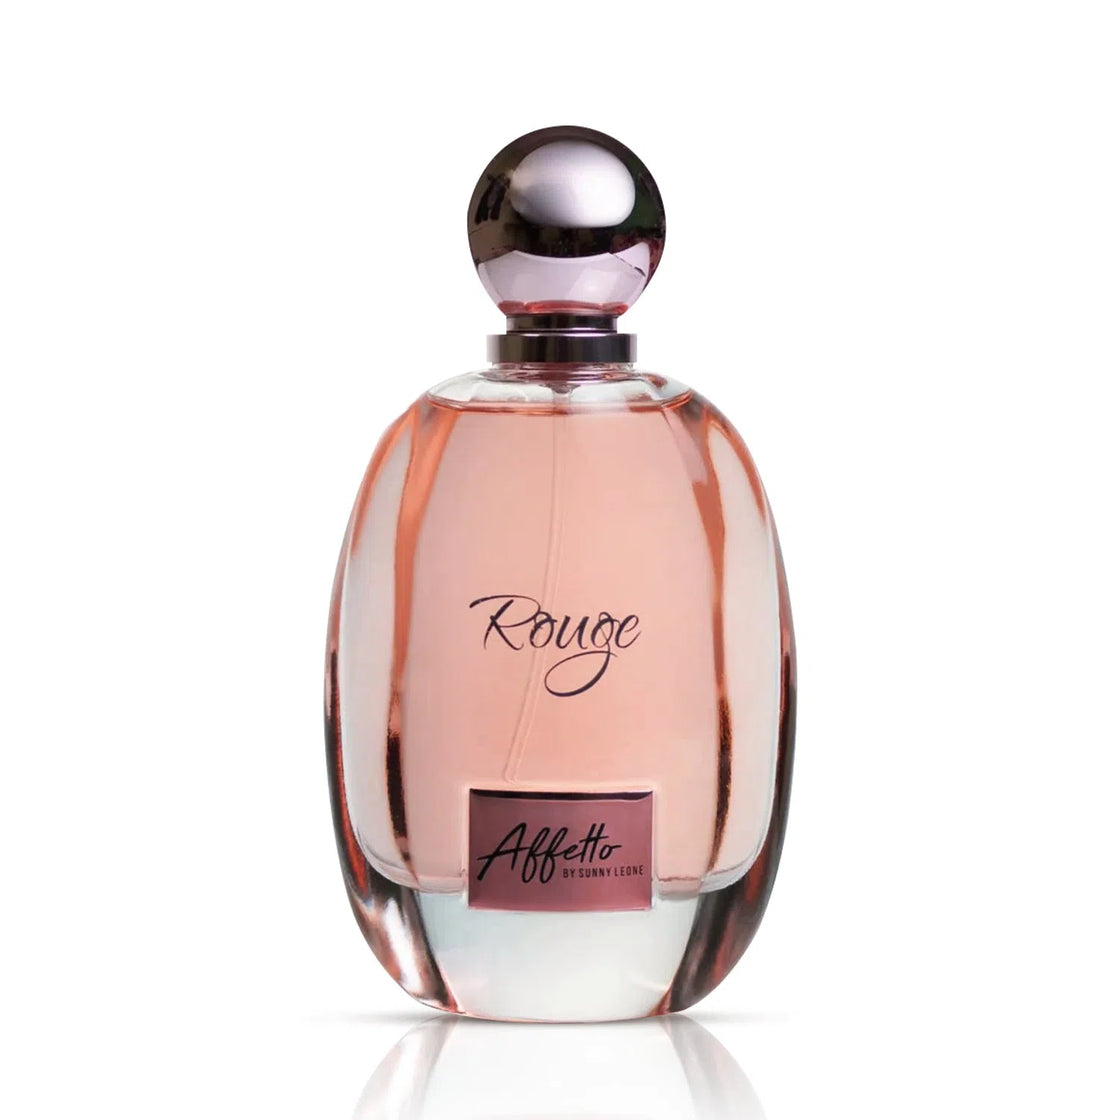 Rouge - For Her (100ml)-Perfume-cruelty free cosmetics-Sunny Leone